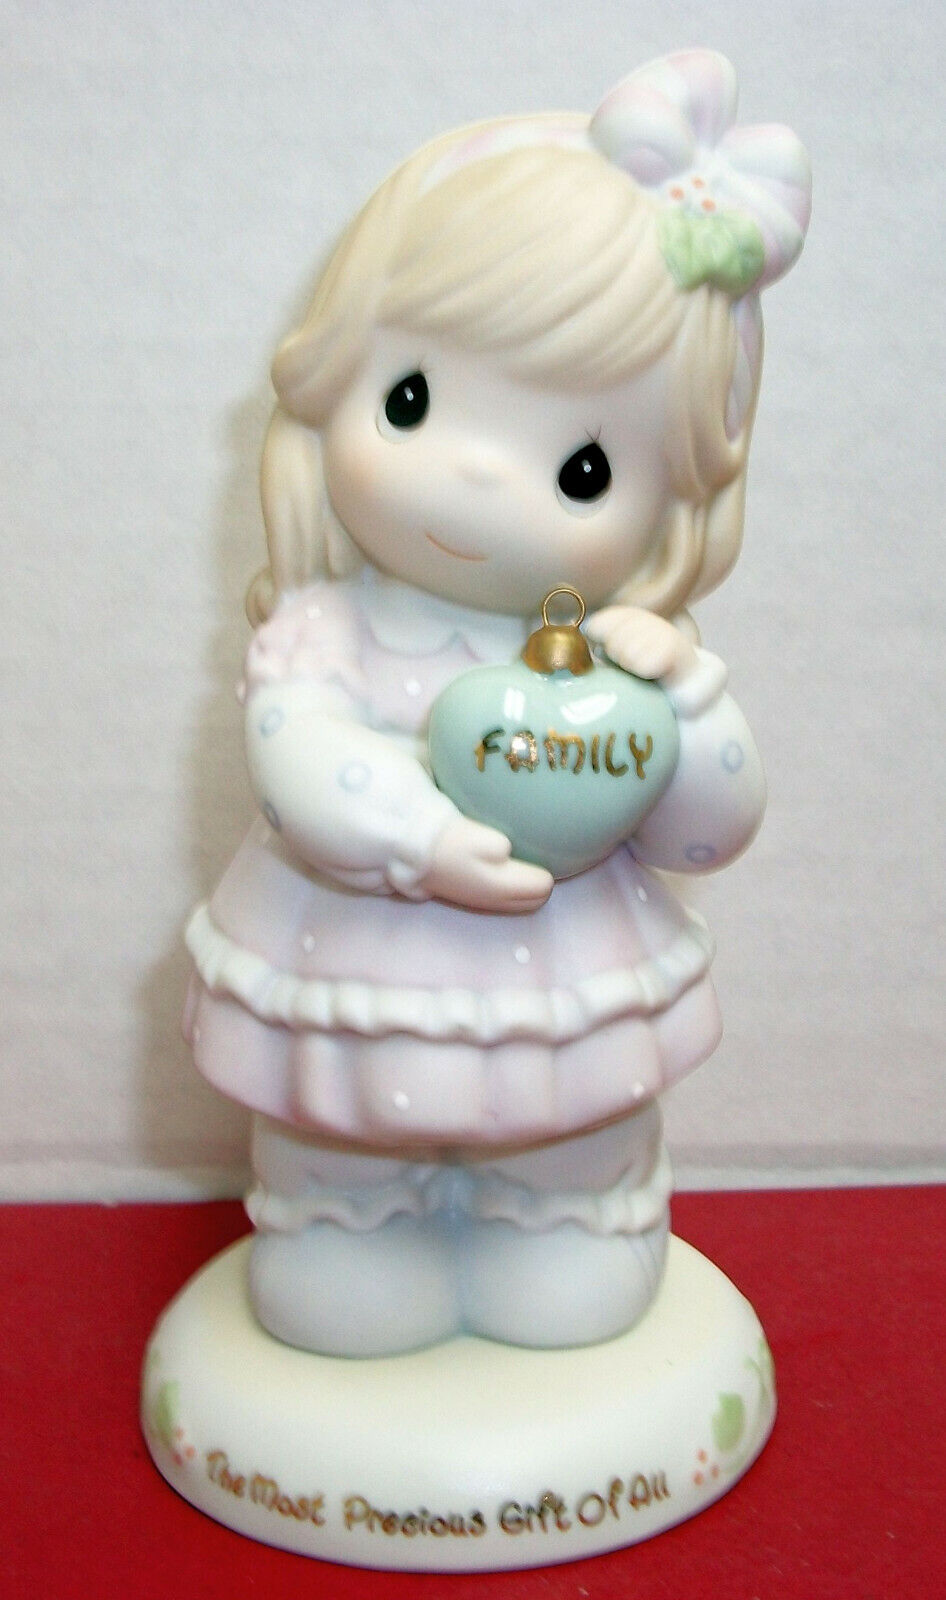 ENESCO Precious Moments 1996 MOST PRECIOUS GIFT OF ALL Family Figurine  #183184